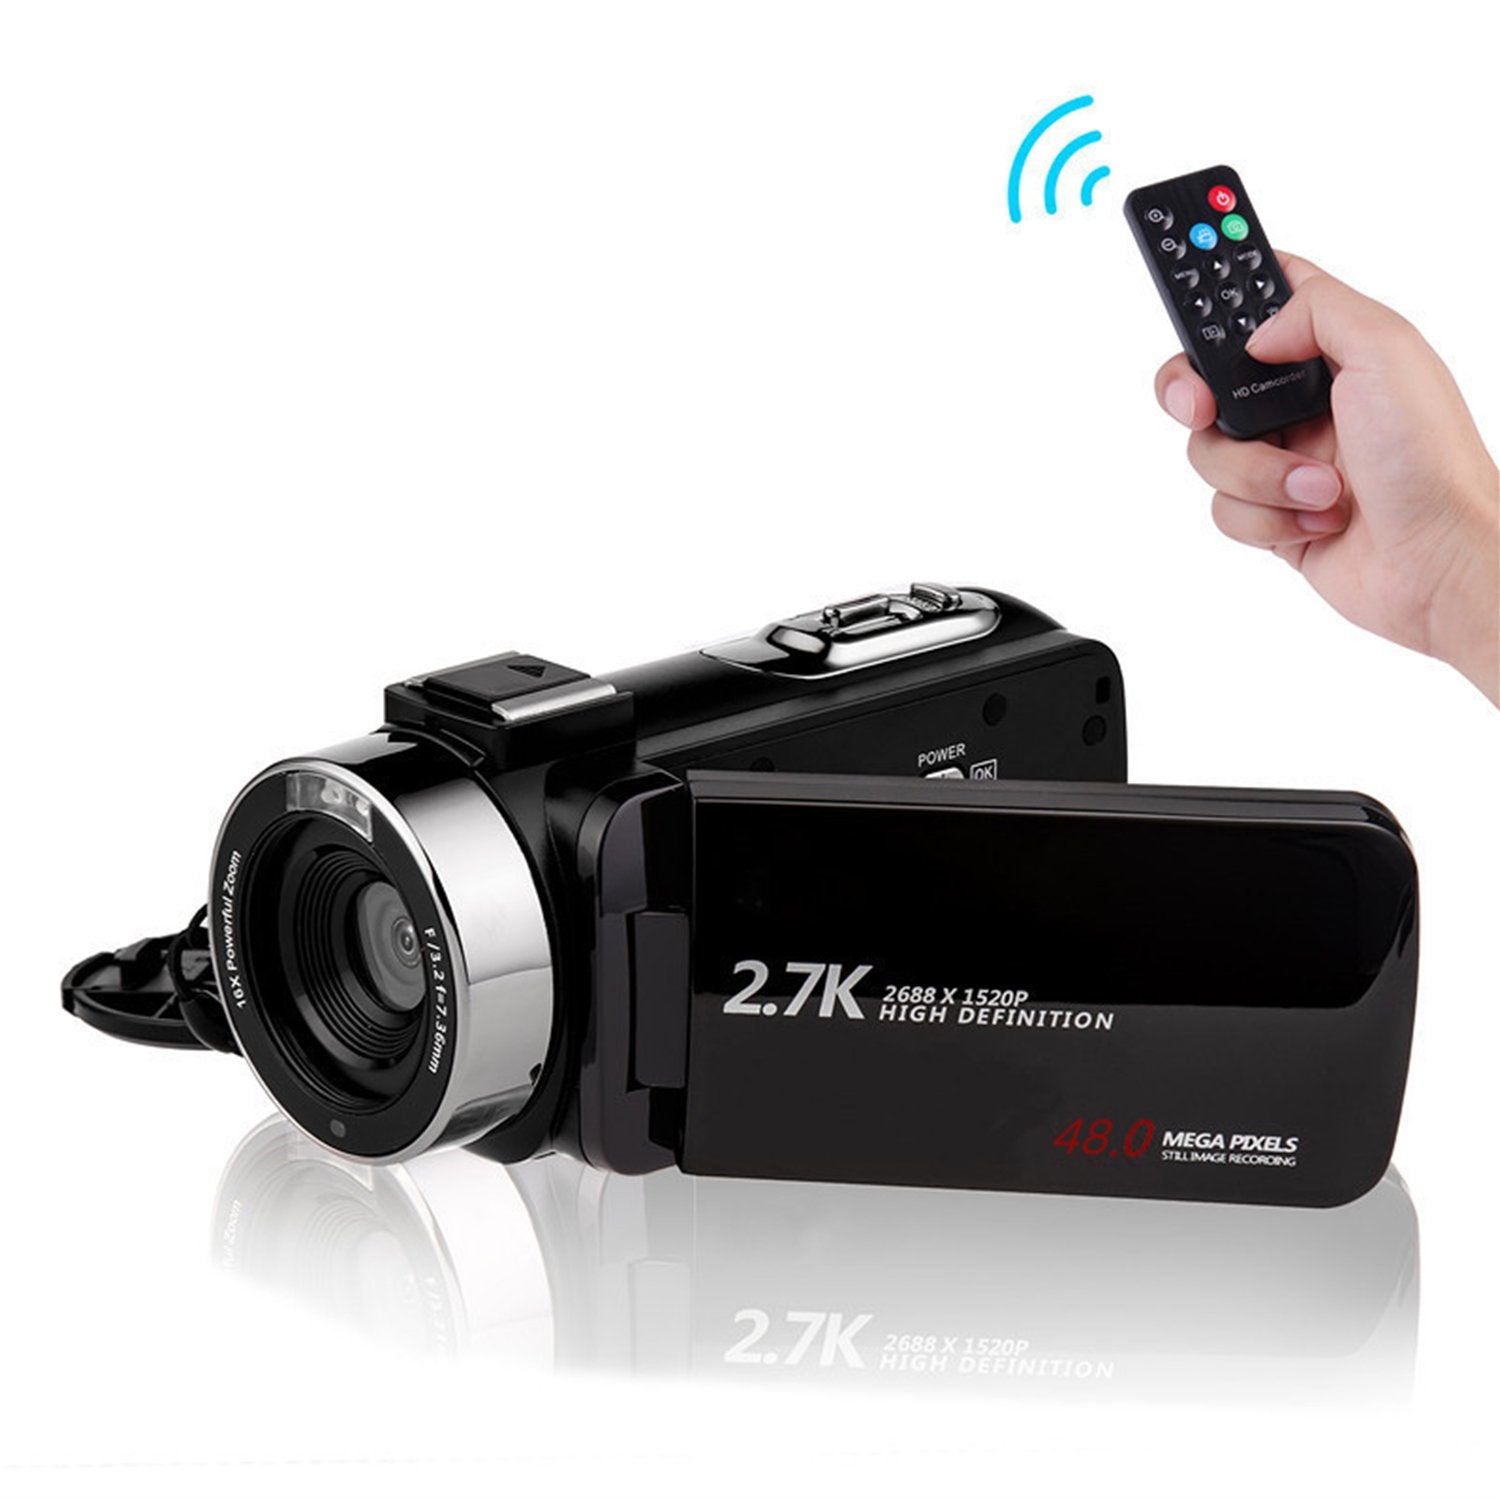 Doosl Digital Video Camera Camcorder, UHD 2.7K 30 FPS 48.0 MP Vlogging Camera Recorder for Youtube, 16X Digital Zoom, Black